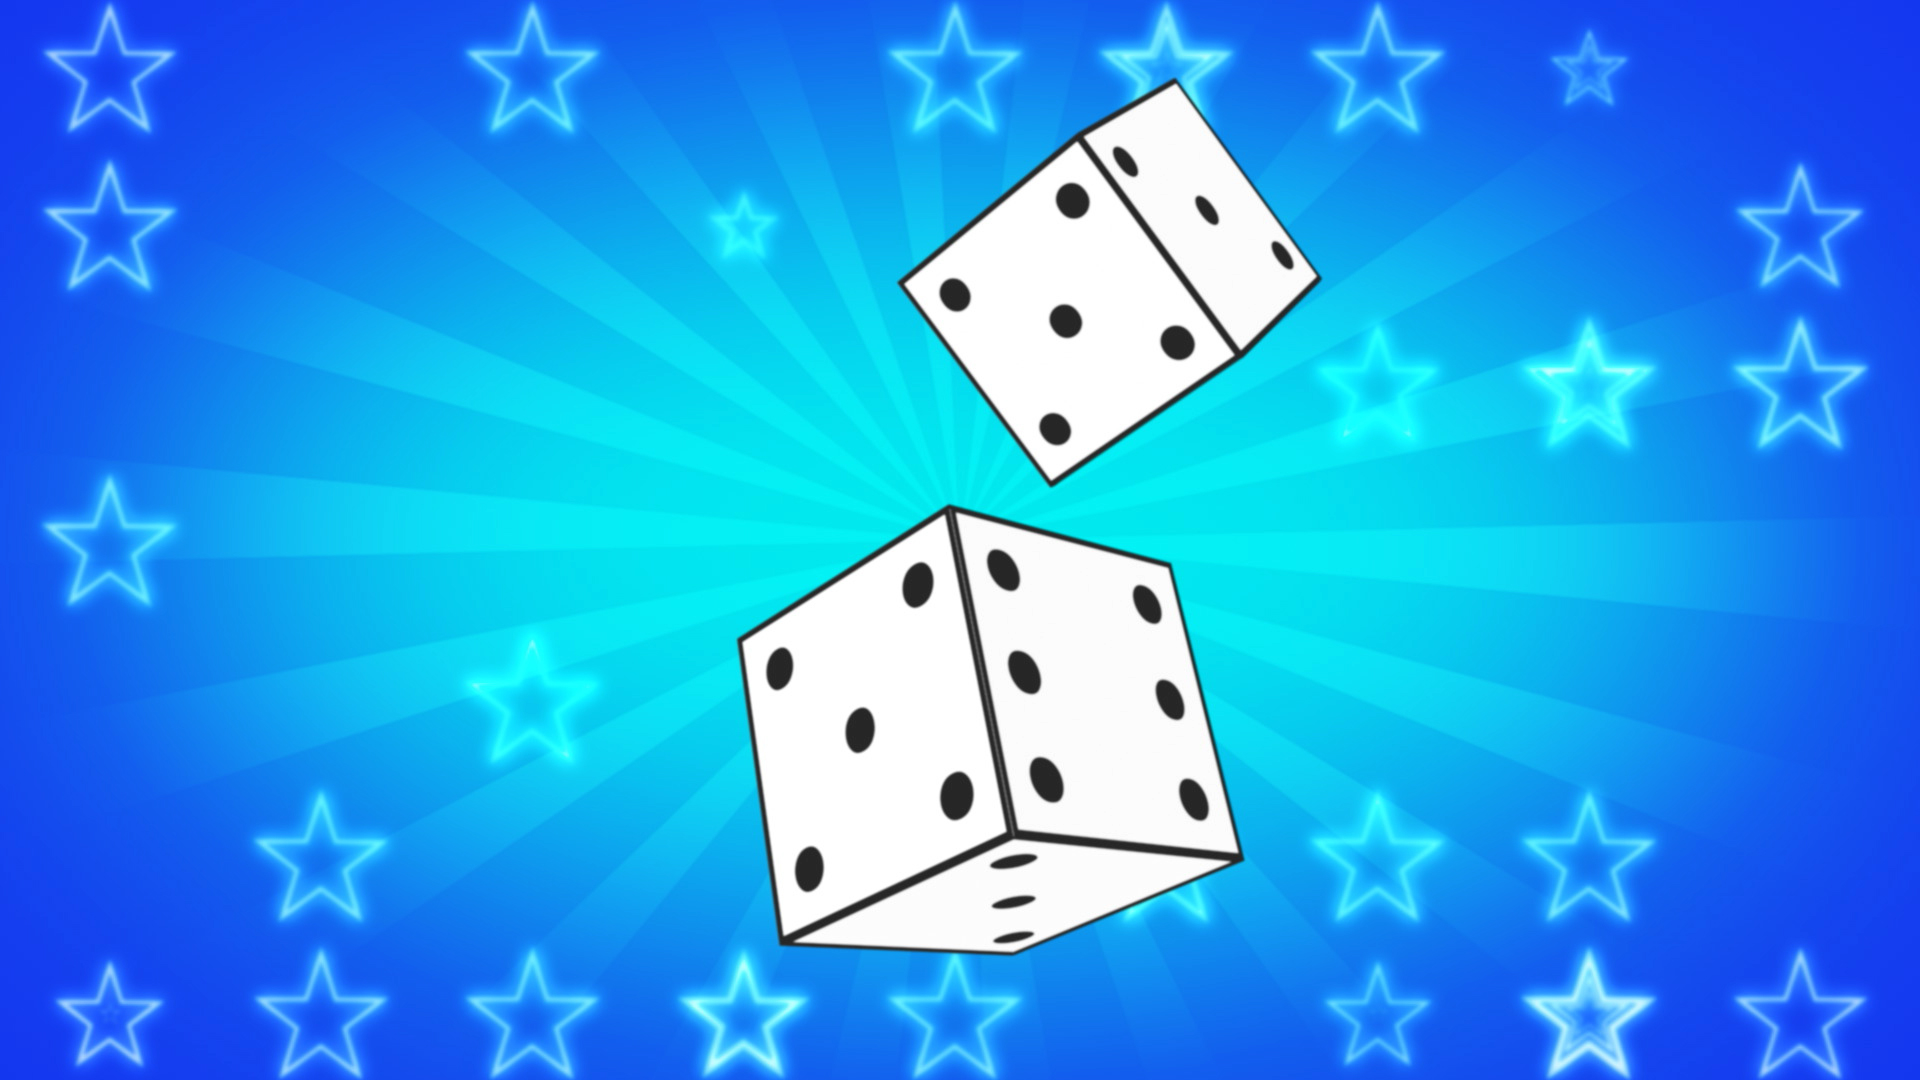 probability dice image